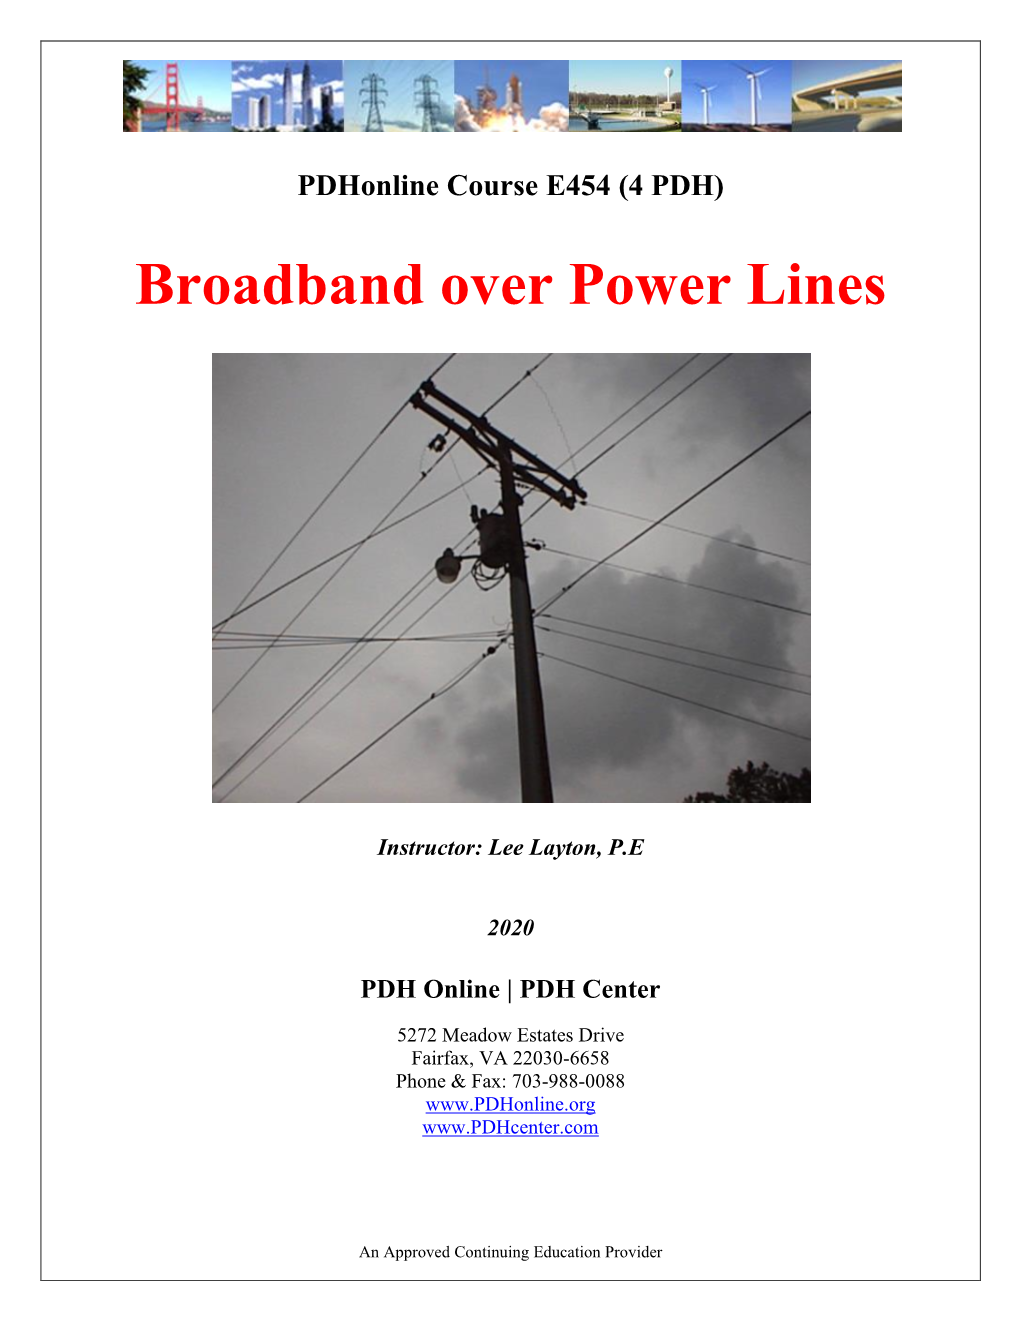 Broadband Over Power Lines